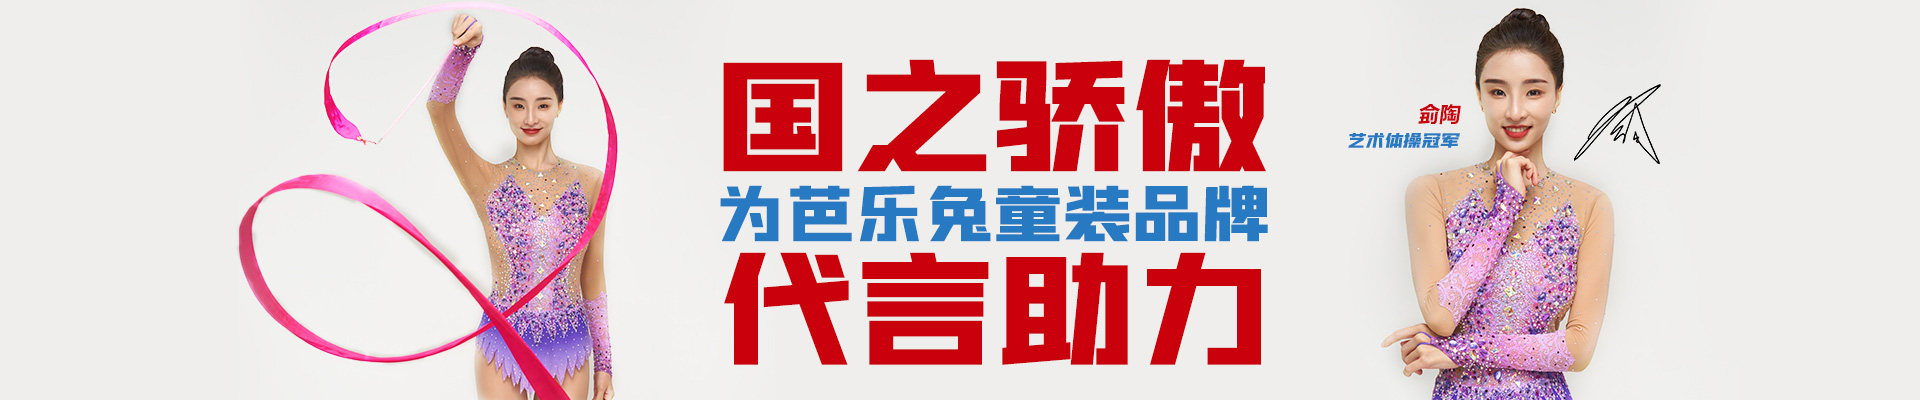 pc端新聞中心banner